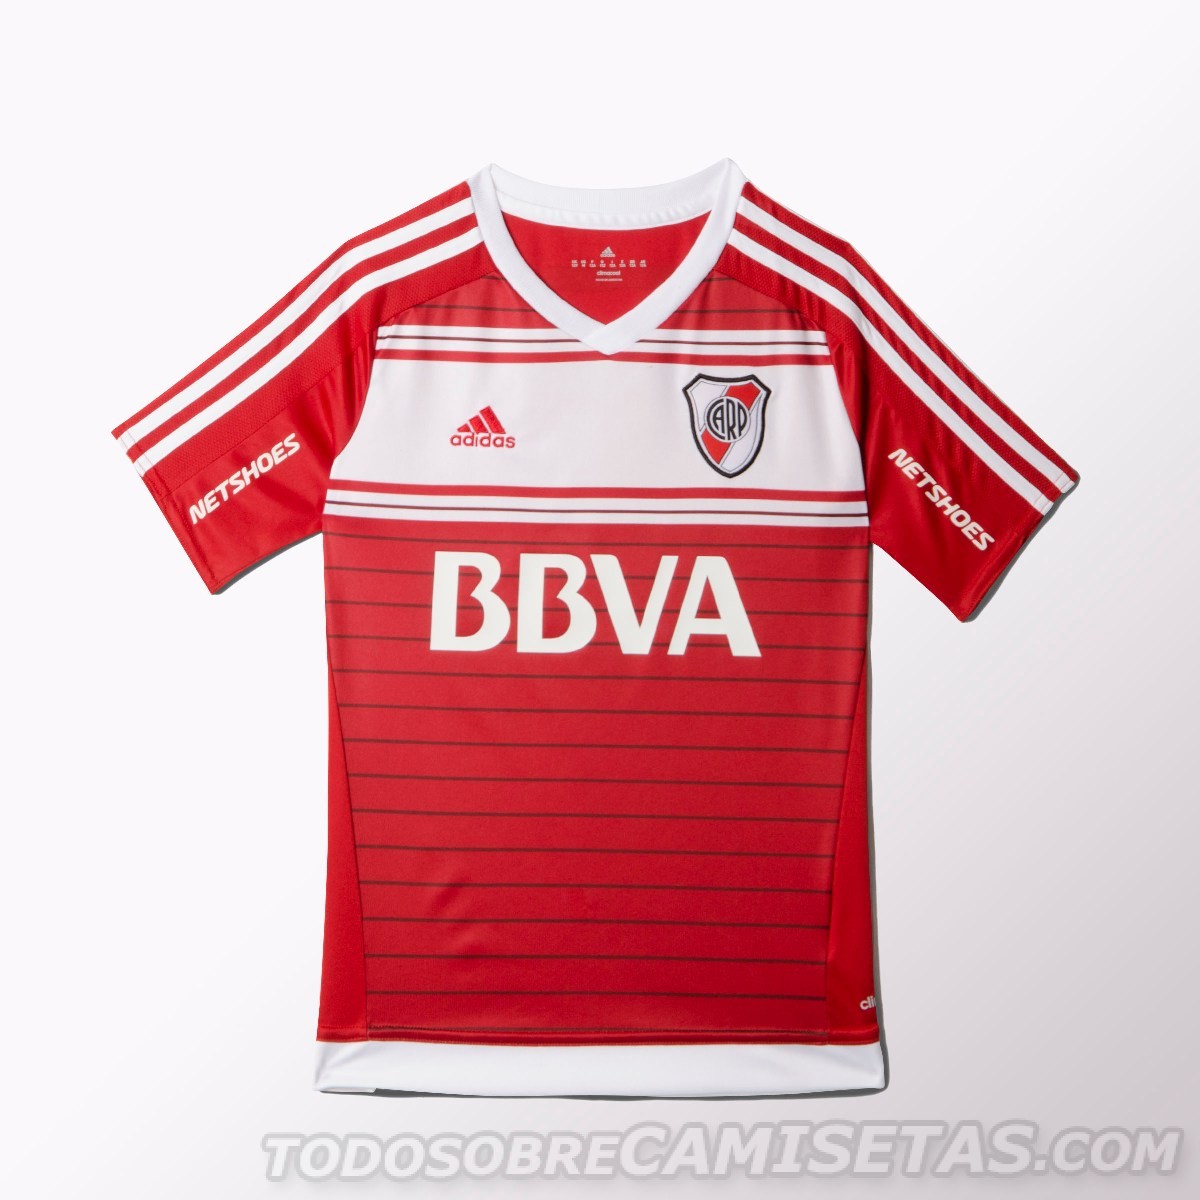 Camiseta adidas alternativa de River Plate 2016